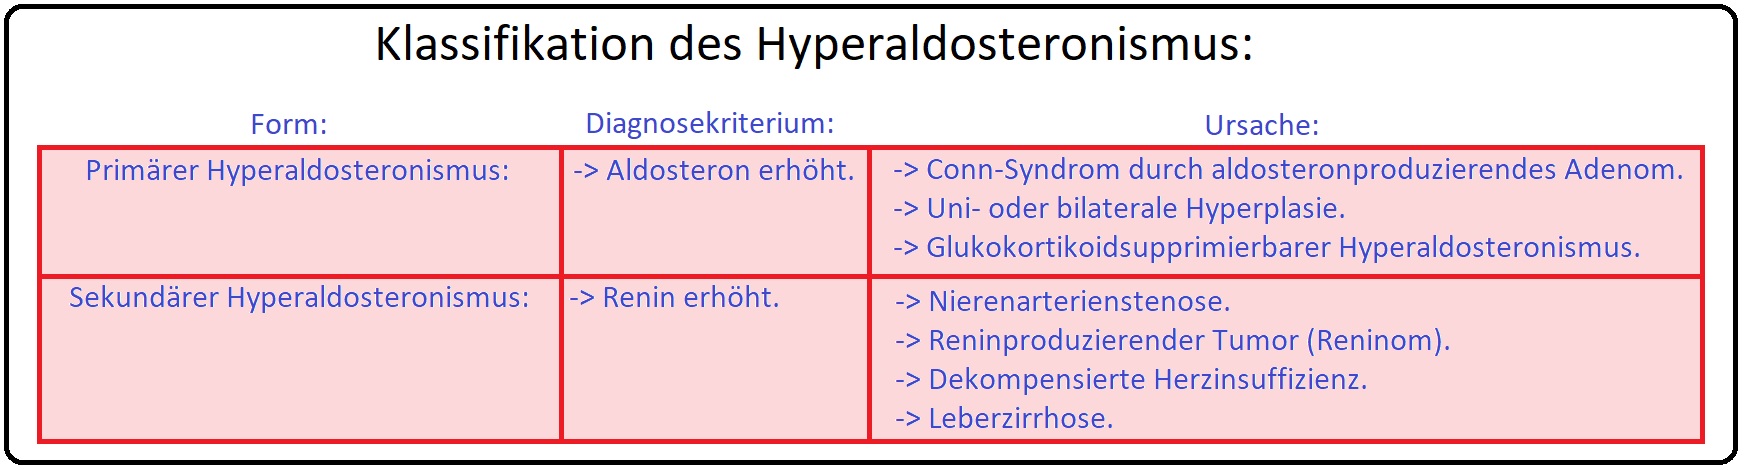 1078 Klassifikation des Hyperaldosteronismus